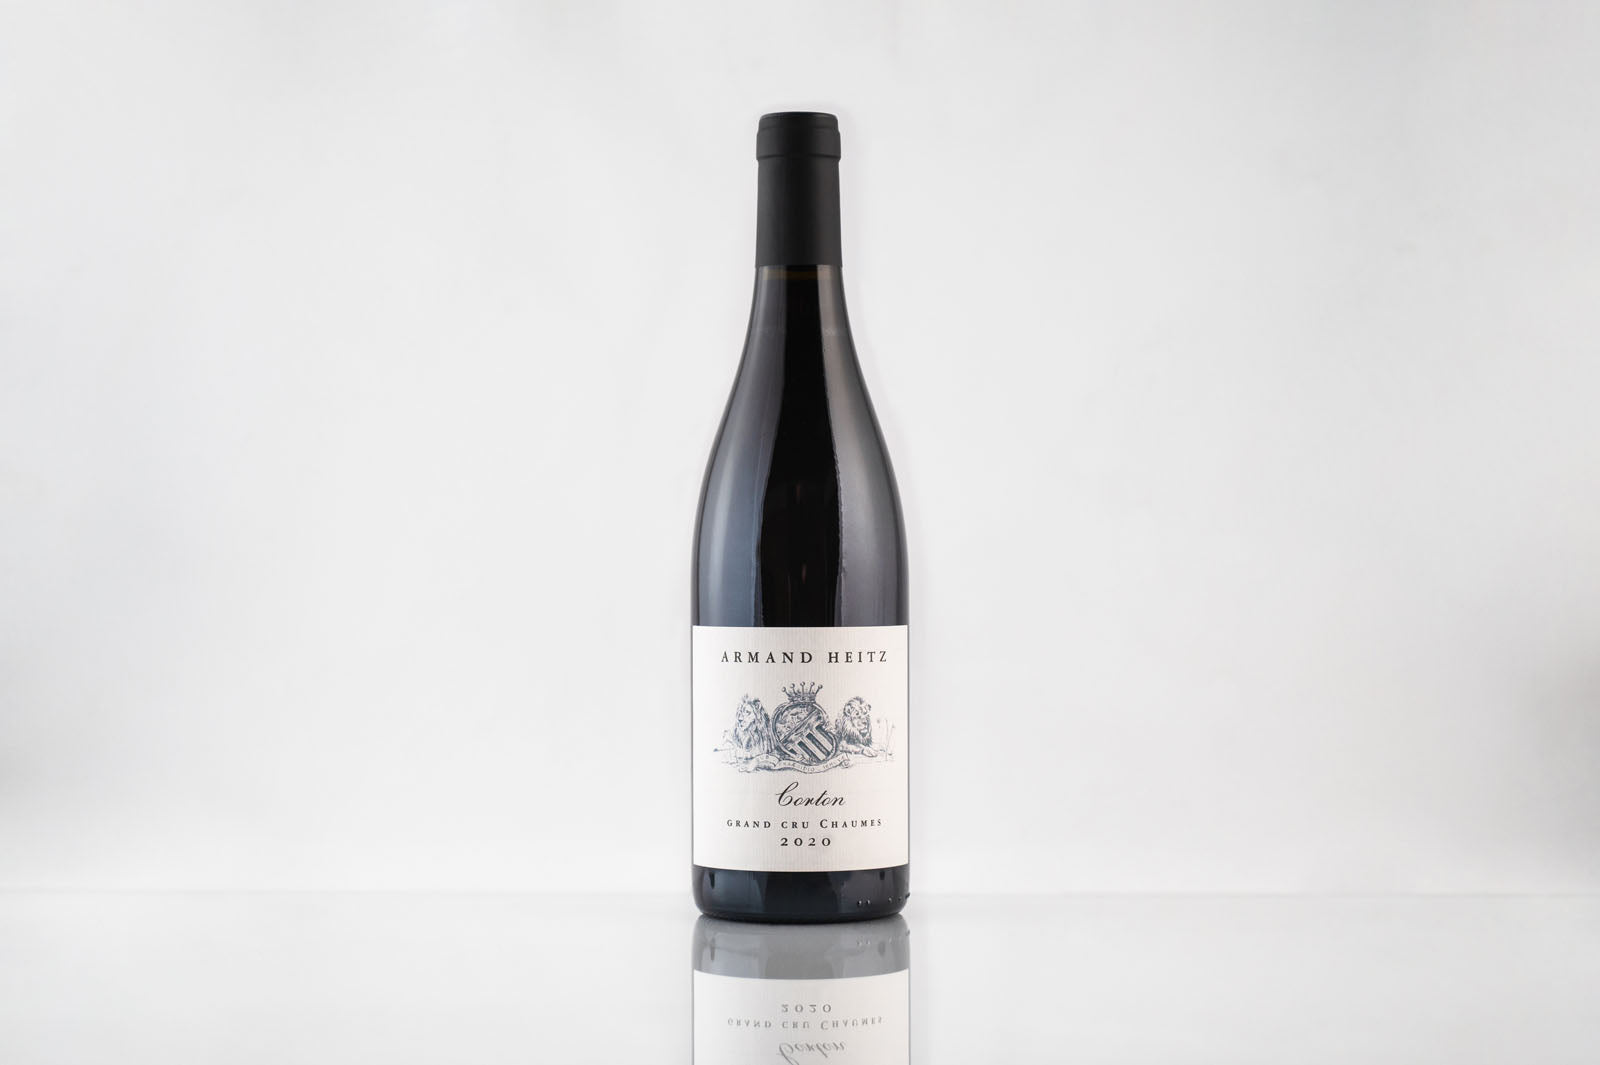 Corton Grand Cru Chaumes 2020 Armand Heitz vin de Bourgogne